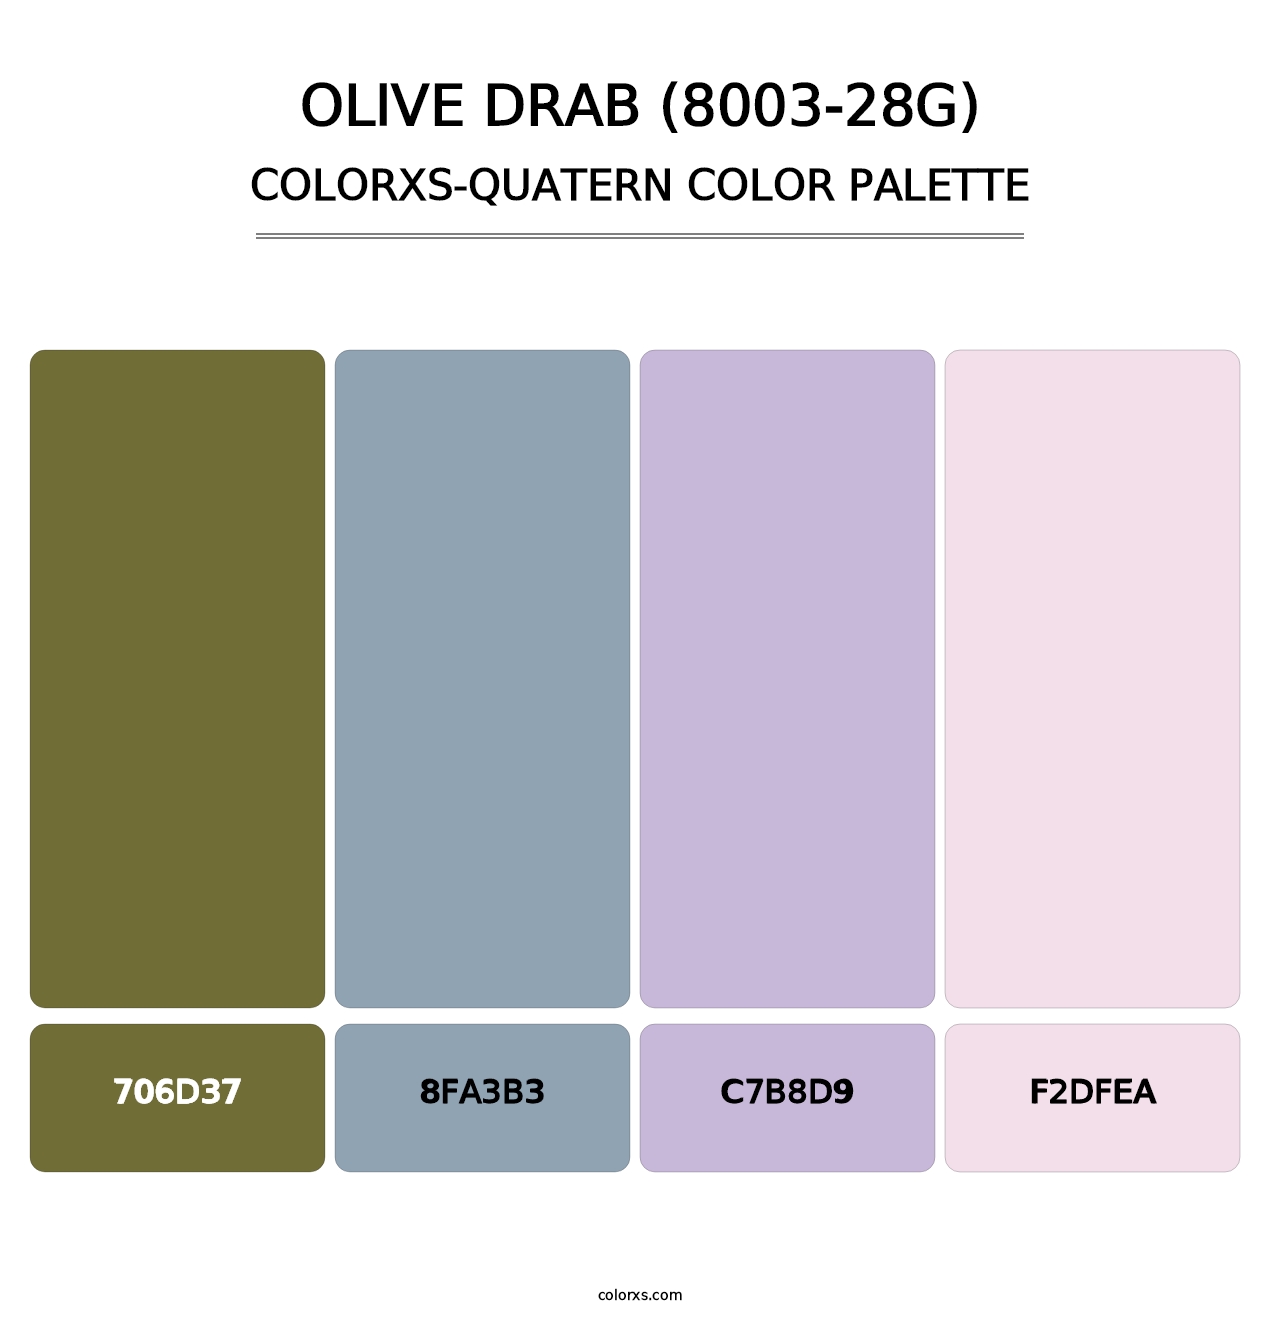 Olive Drab (8003-28G) - Colorxs Quatern Palette